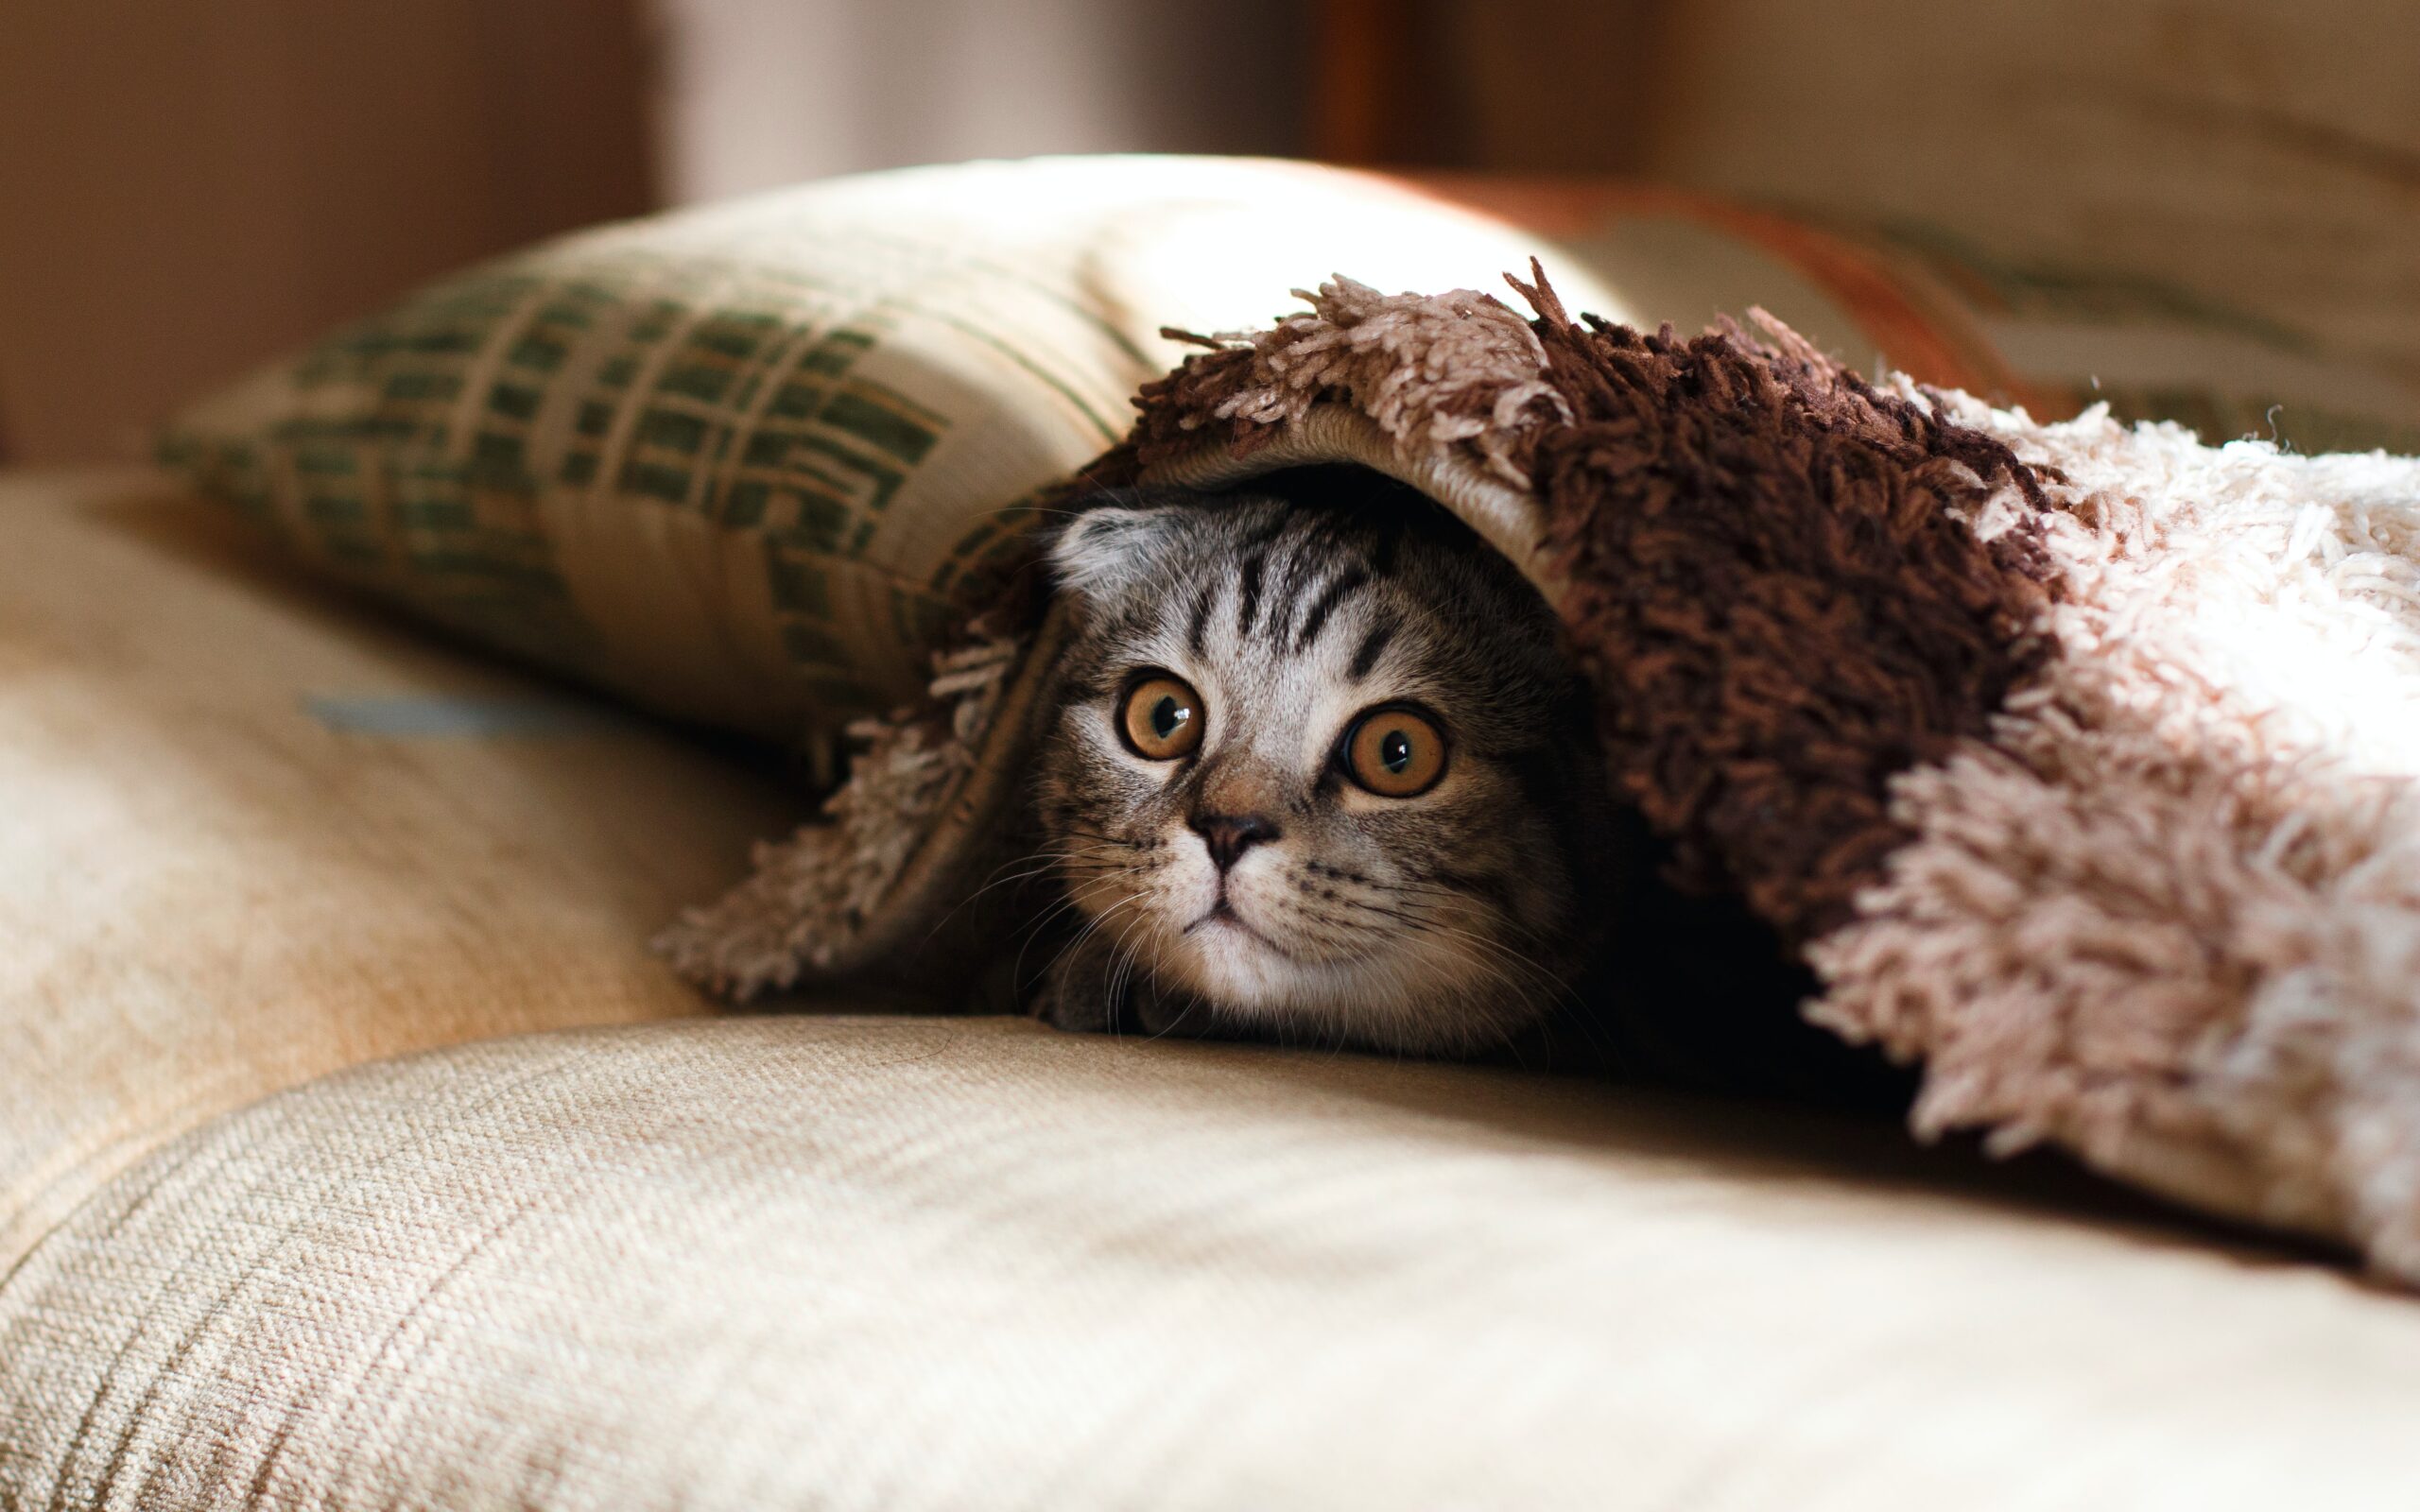 A grey cat hiding under a blanket.